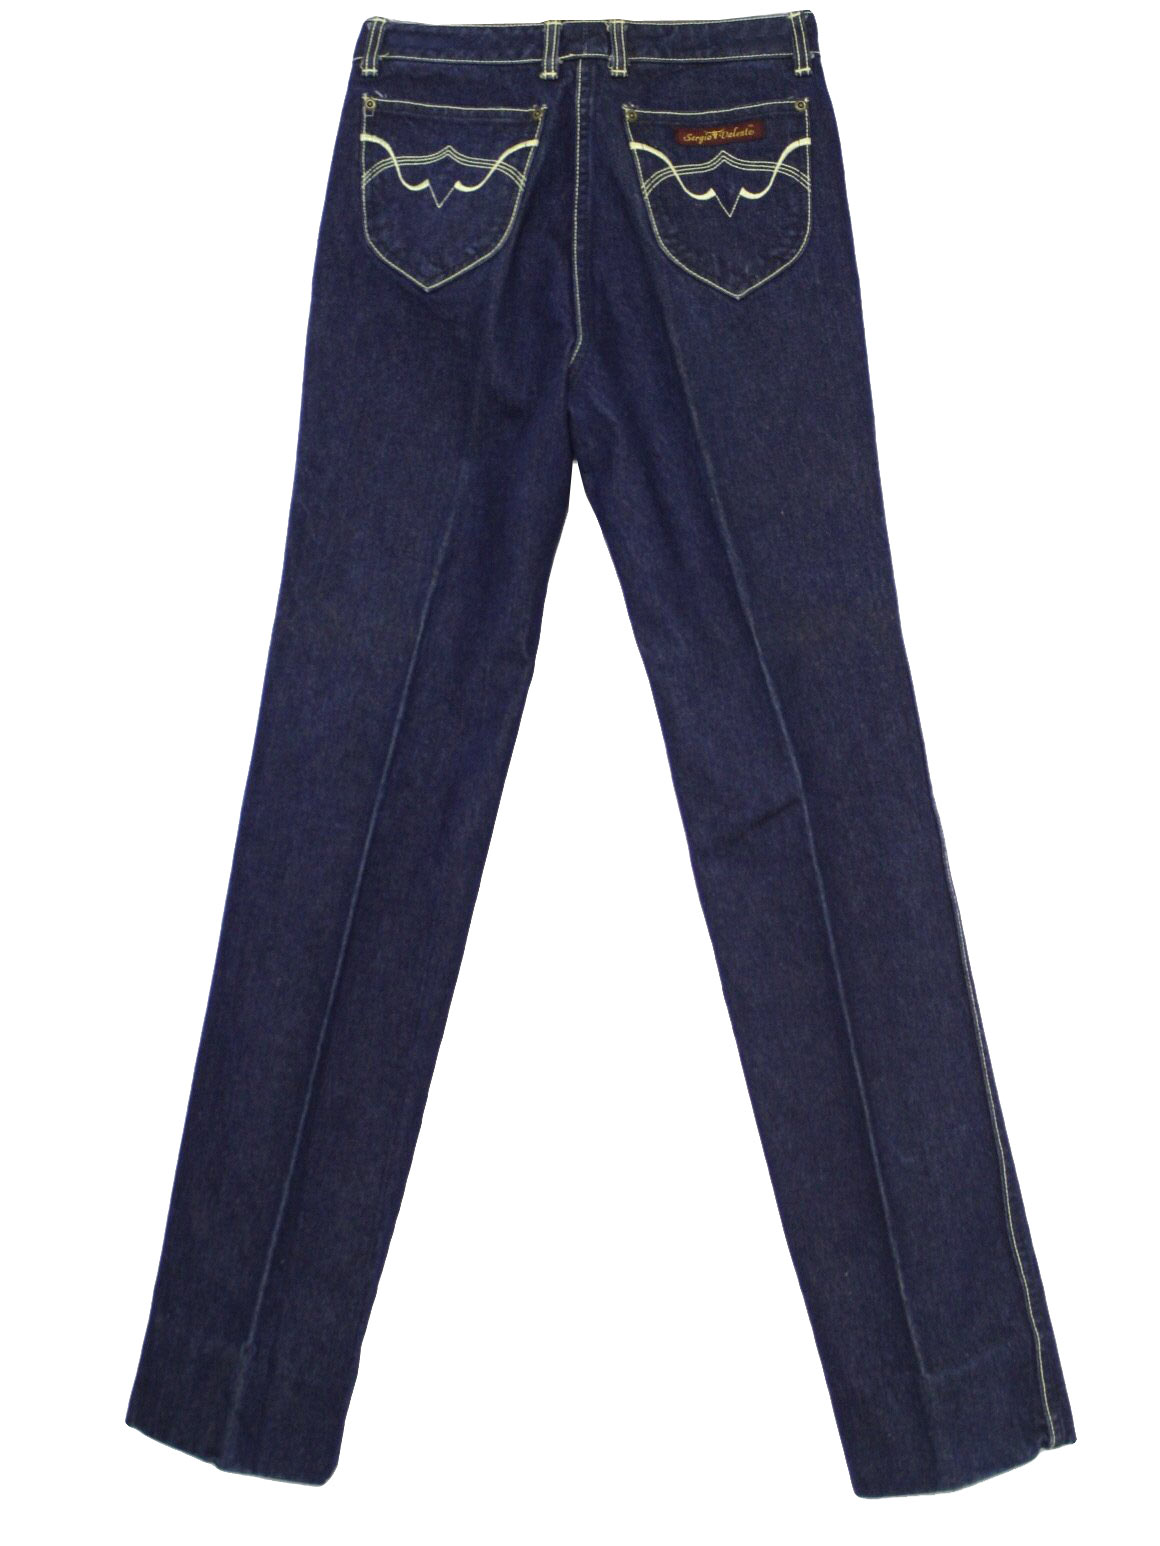 sergio valente jeans 80s